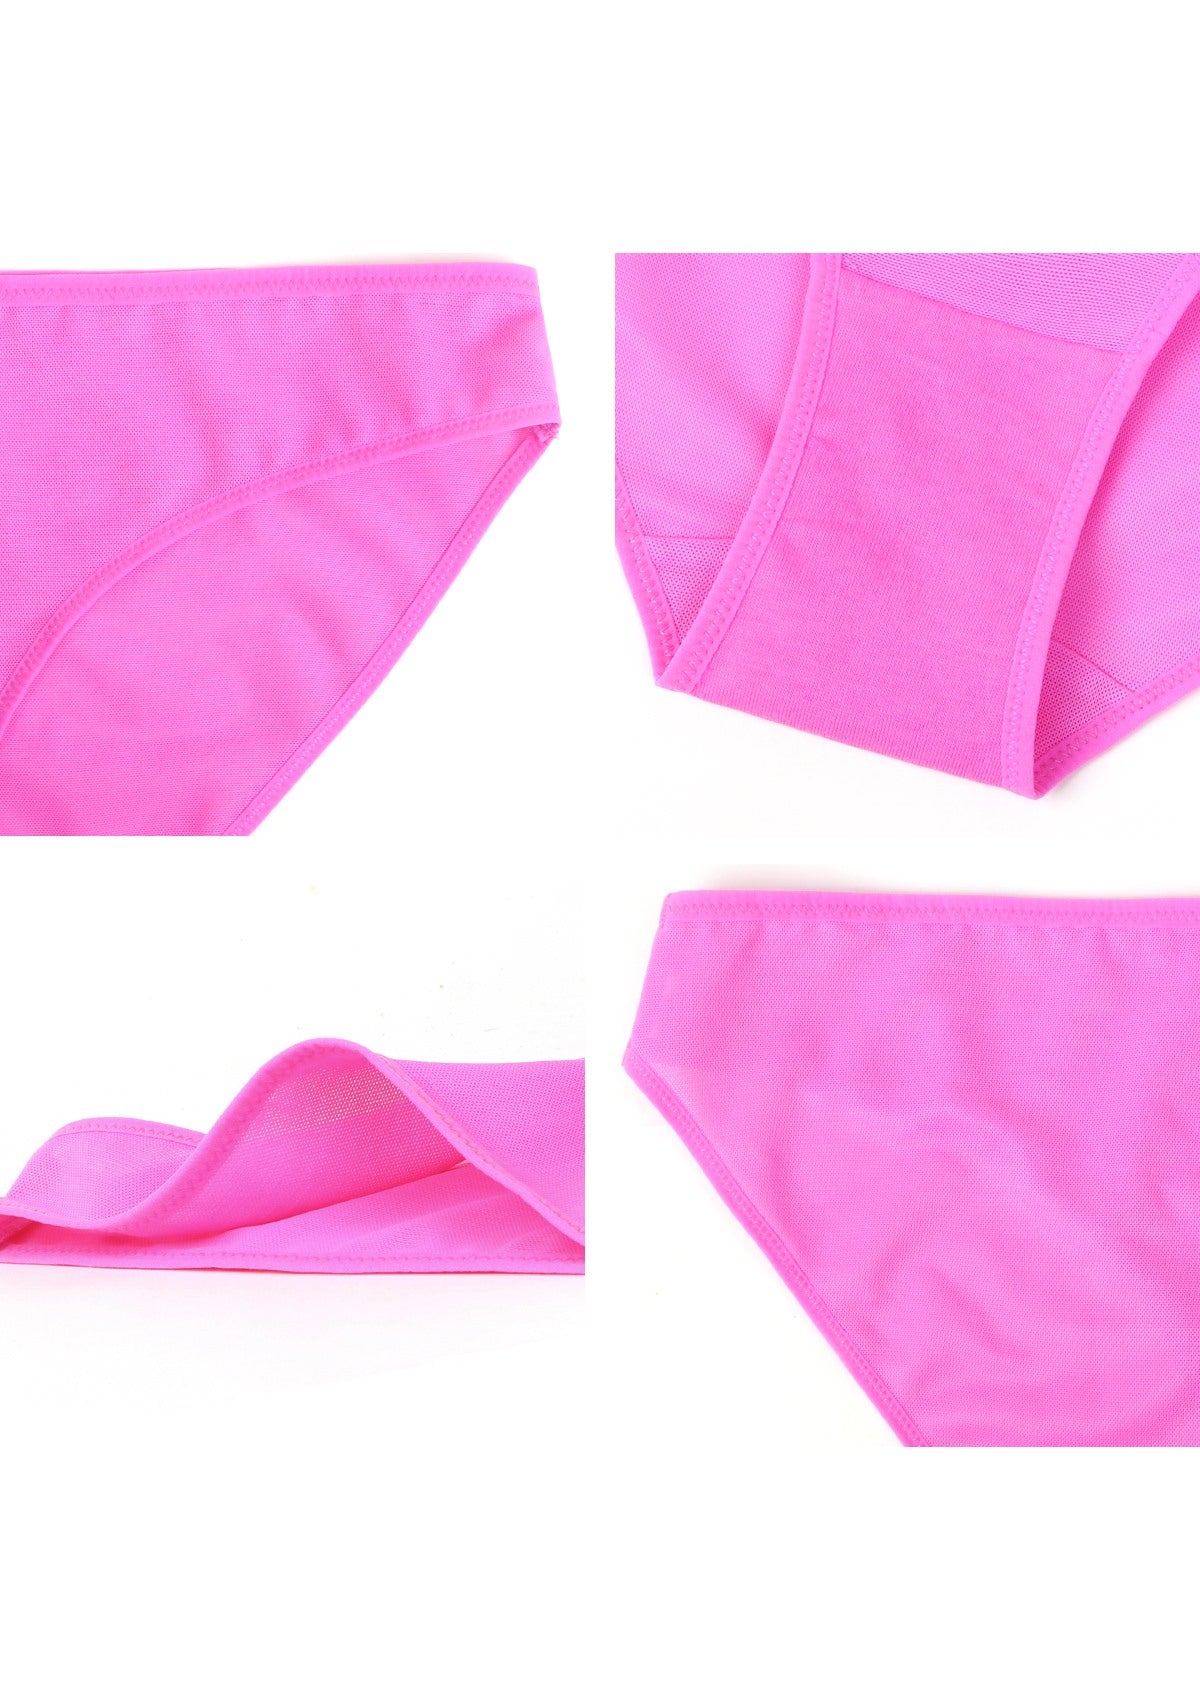 HSIA Billie Smooth Sheer Mesh Lightweight Soft Comfy Bikini Underwear - L / Yellow